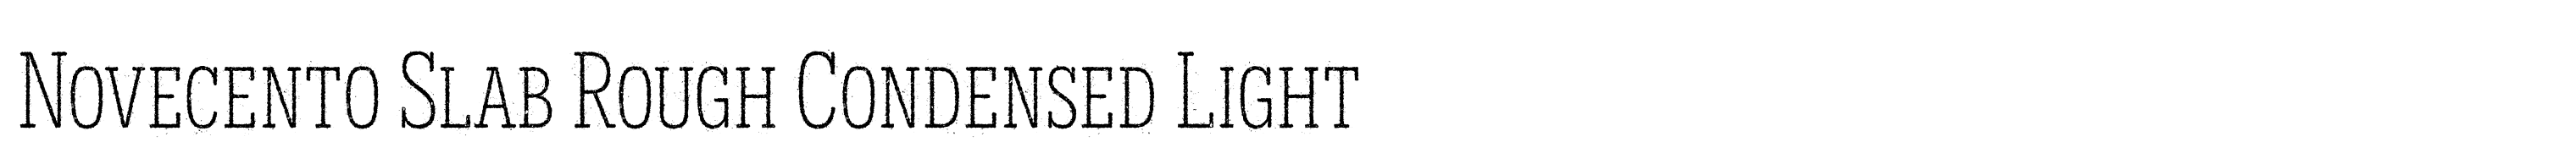 Novecento Slab Rough Condensed Light